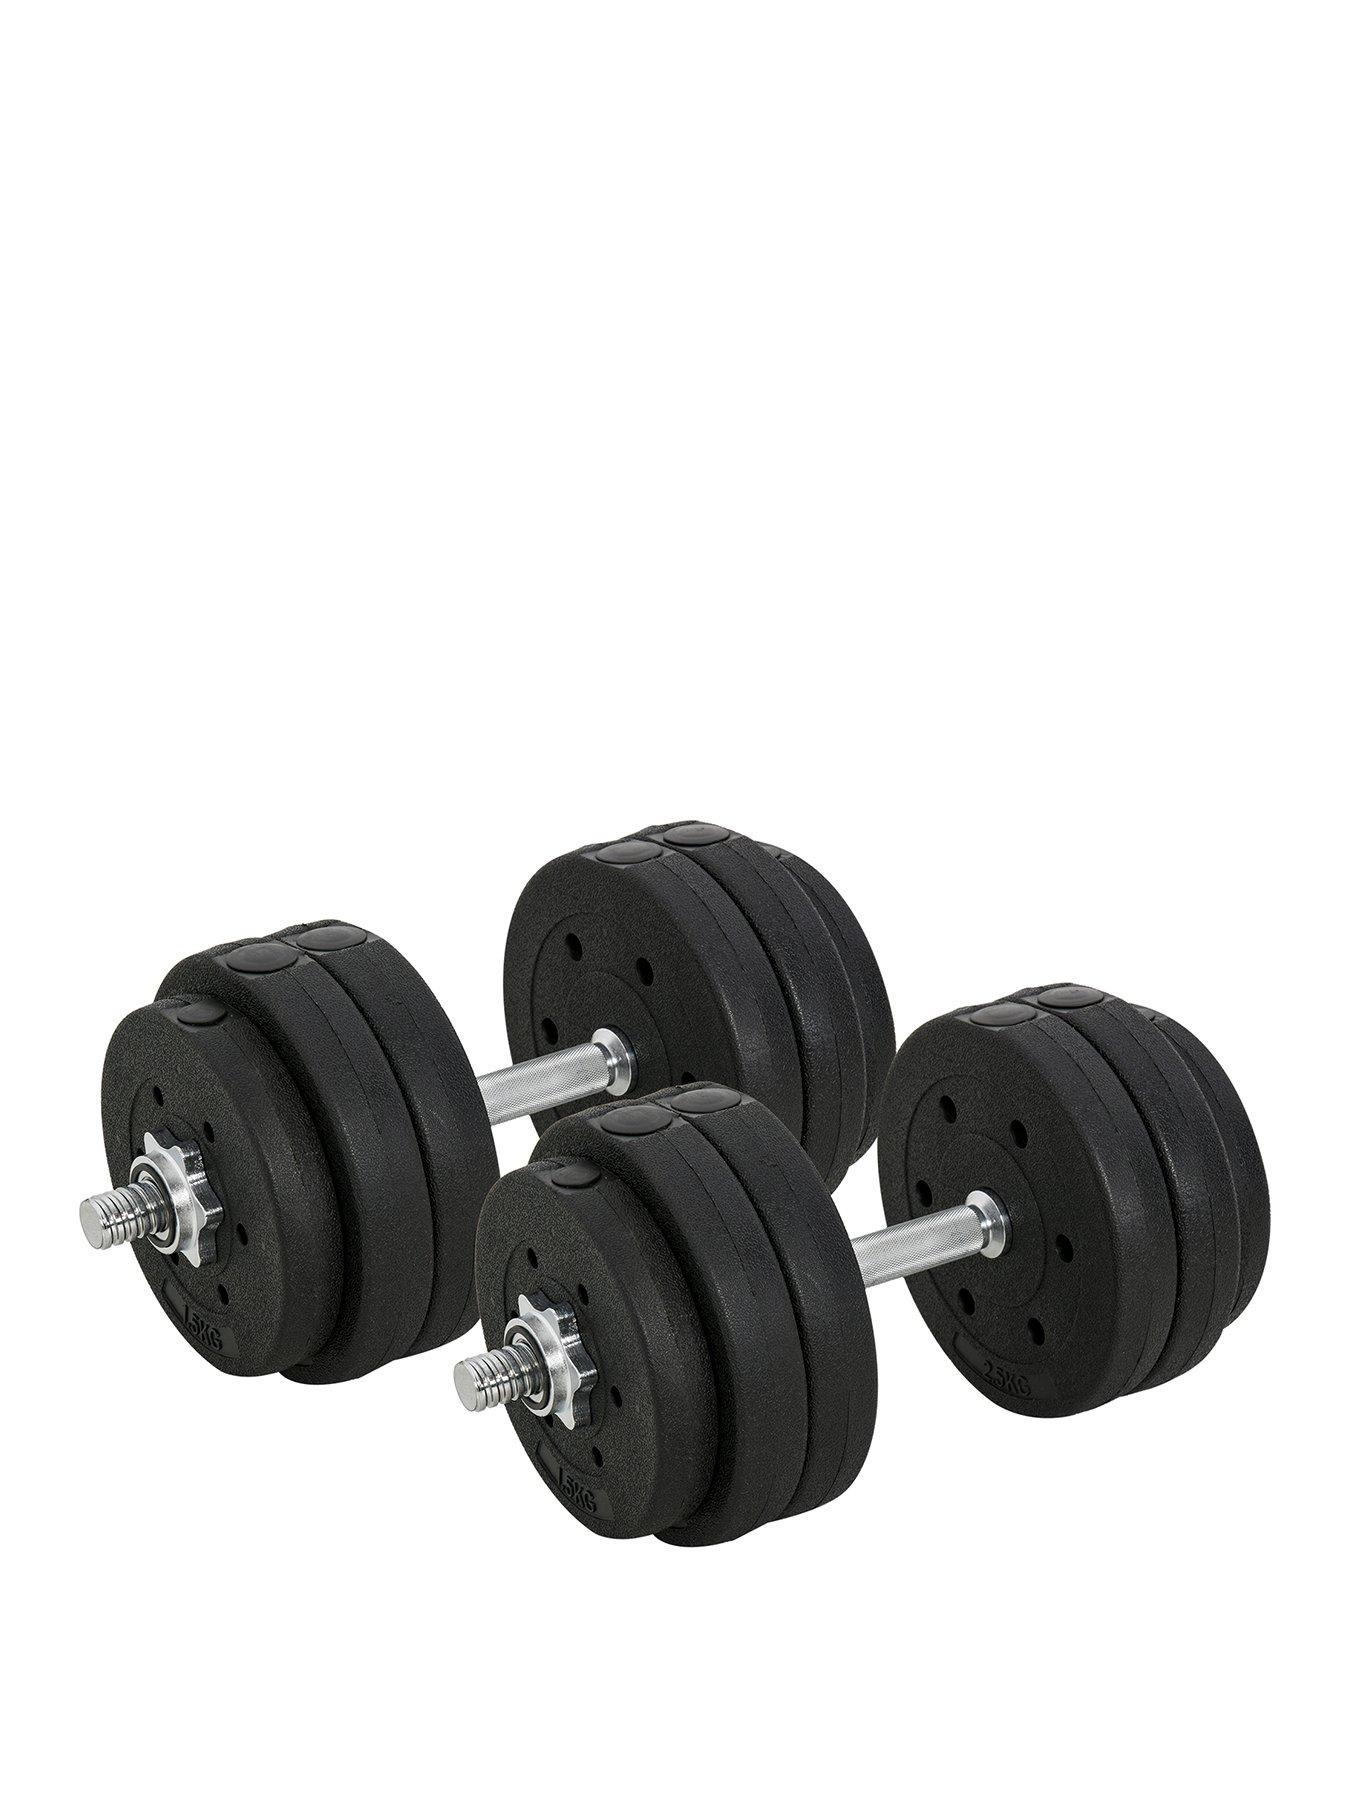 Statoys Fitness Adjustable Barbell Set - 20kg Home Gym Equipment